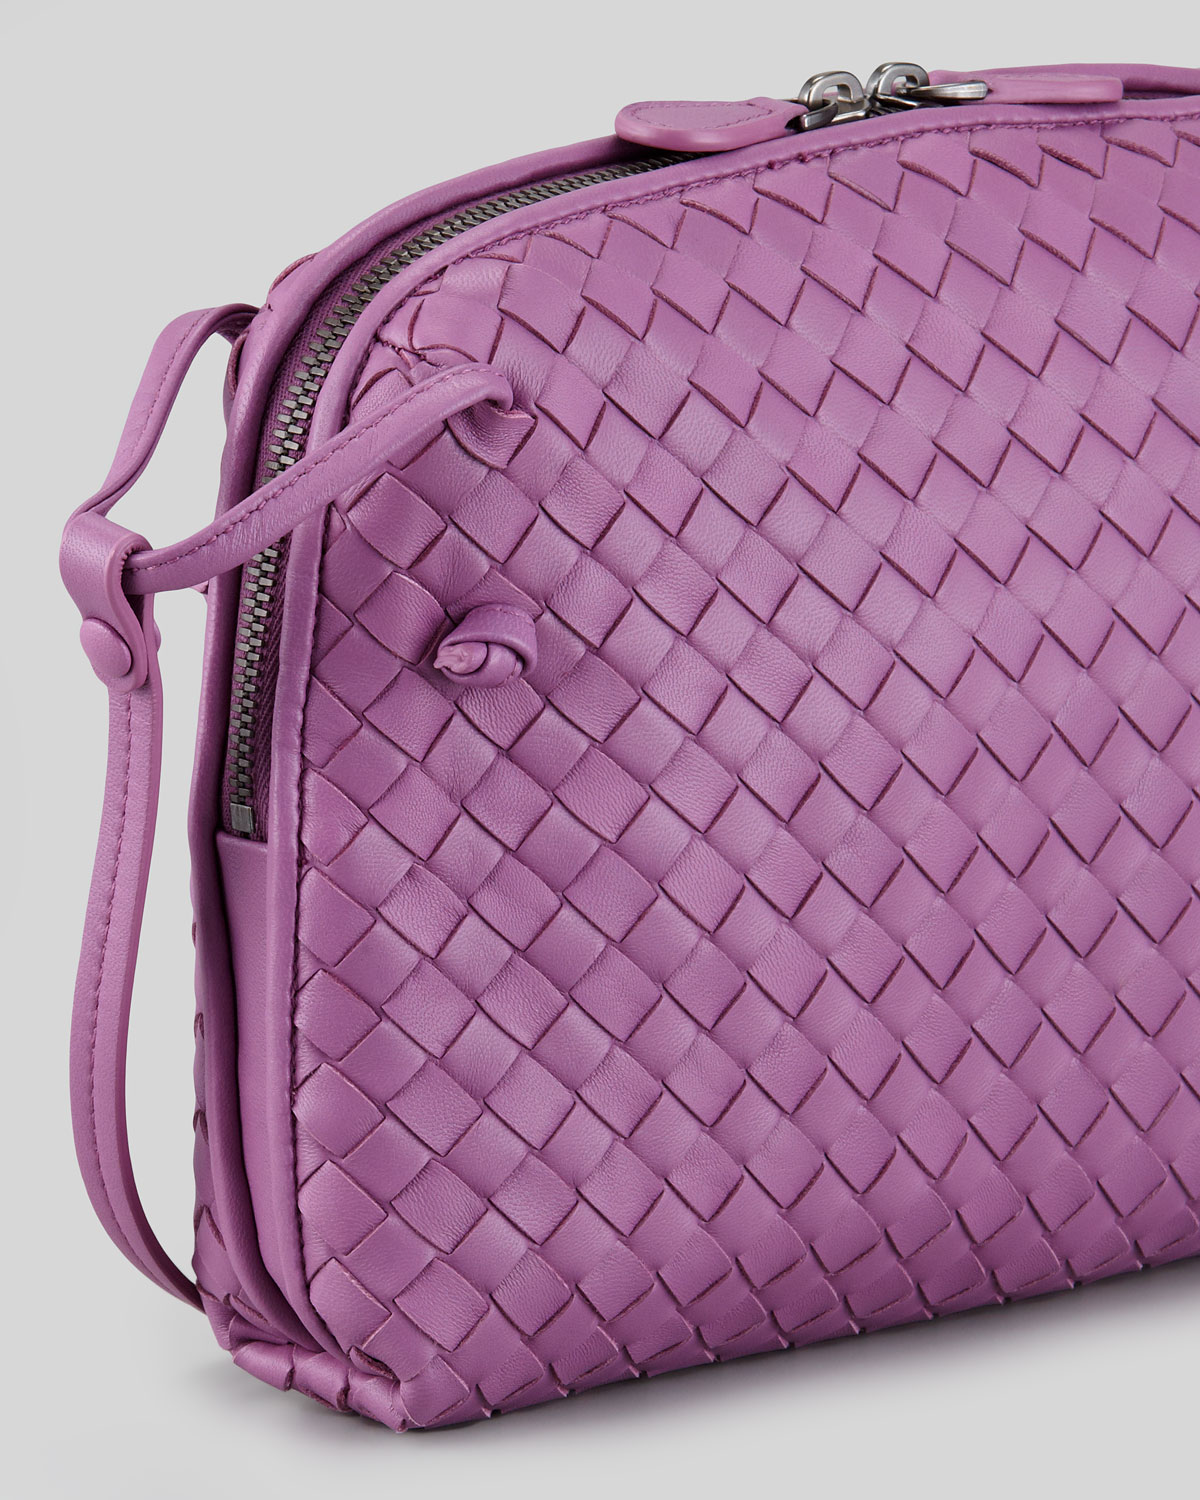 Lyst - Bottega Veneta Veneta Small Crossbody Bag in Purple